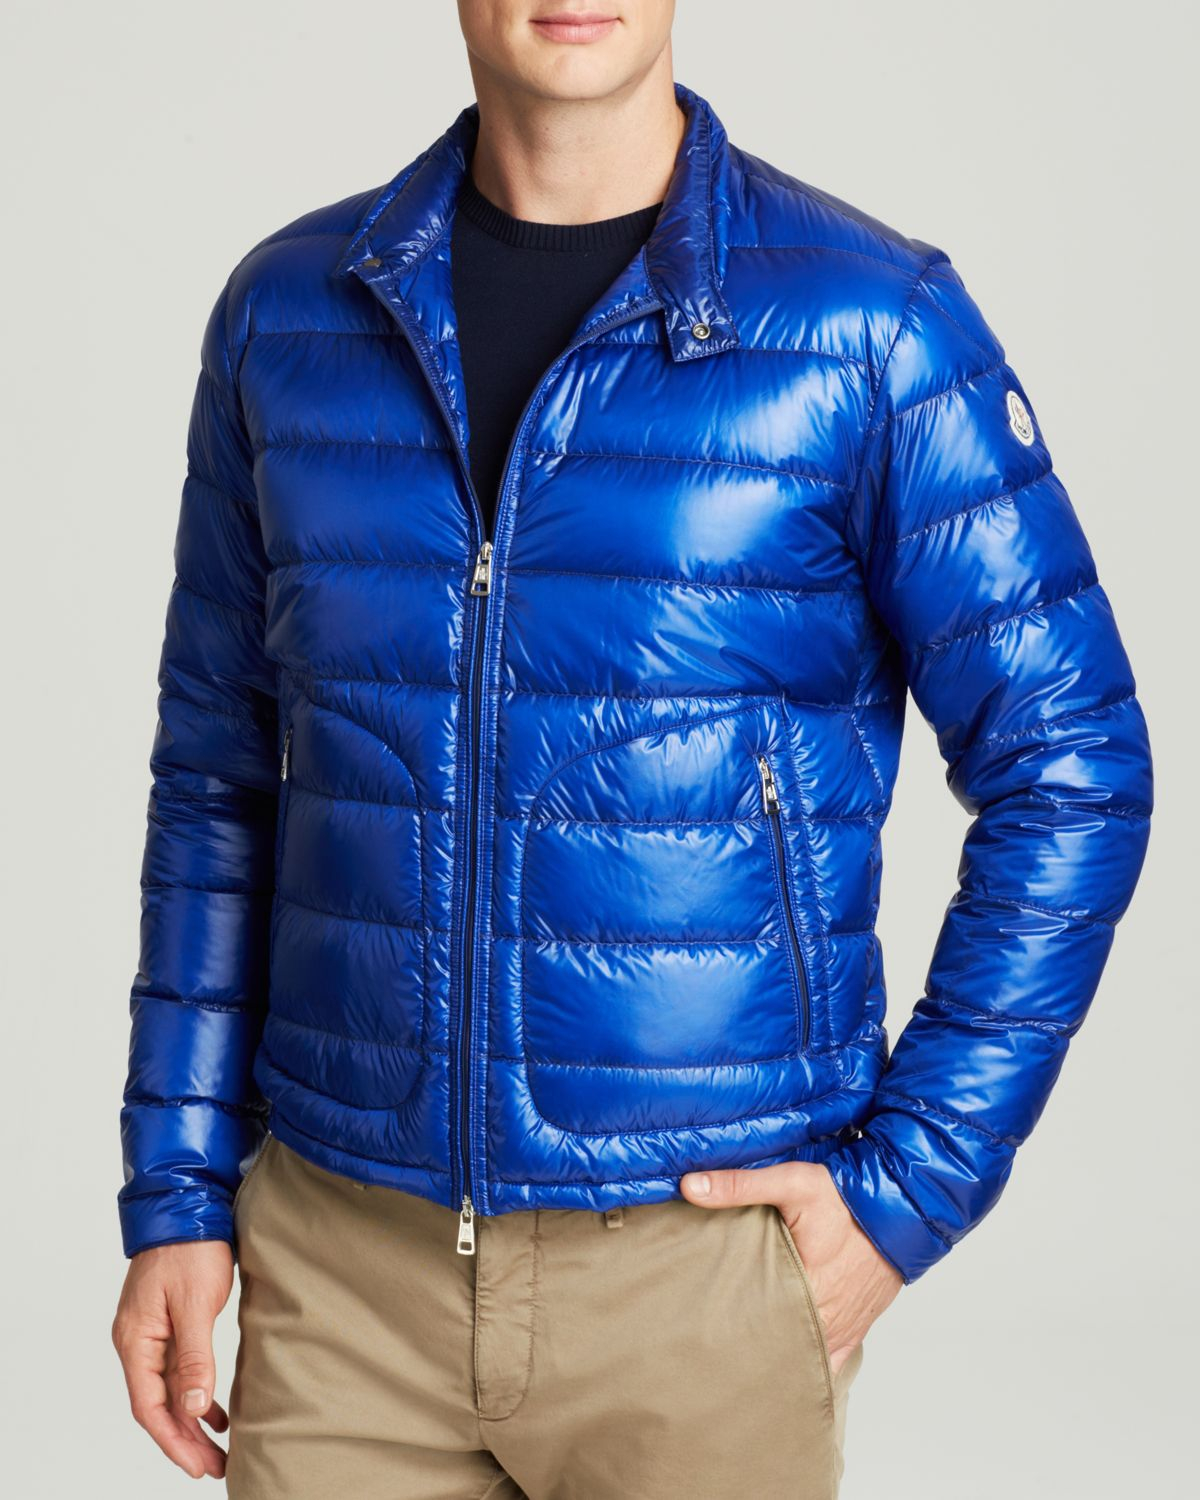 Lyst - Moncler Acorus Down Jacket in Blue for Men